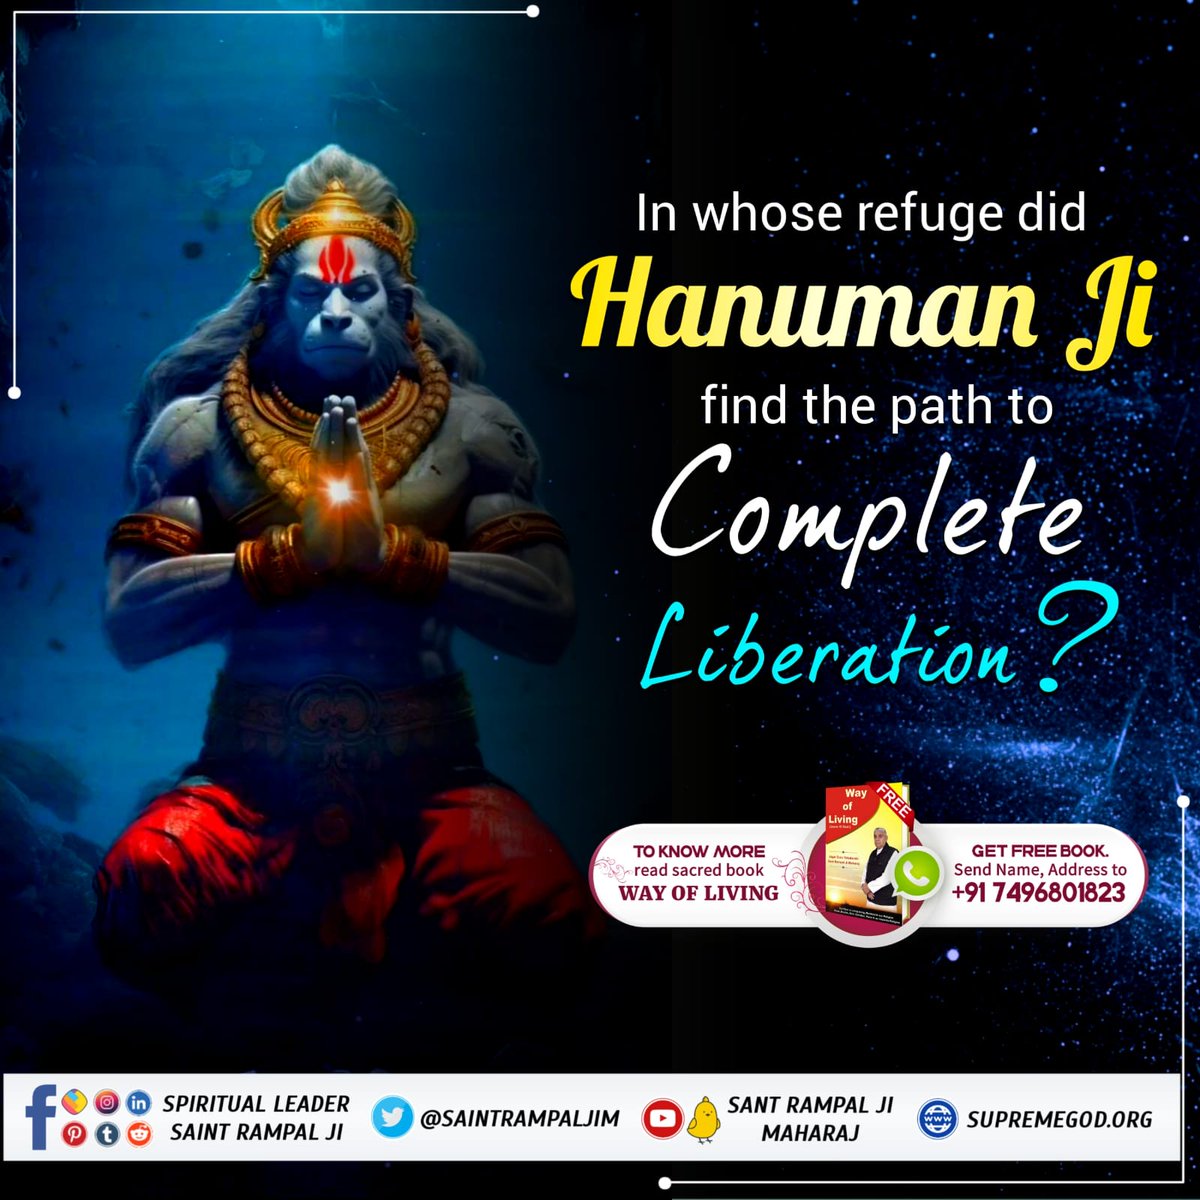 #अयोध्यासे_जानेकेबाद_हनुमानको मिले पूर्ण परमात्मा The Real God came from Satlok and met the Benevolent soul Hanuman Ji. Who was that Real God?
#SaintRampalJiQuotes
#GodMorningWednesday